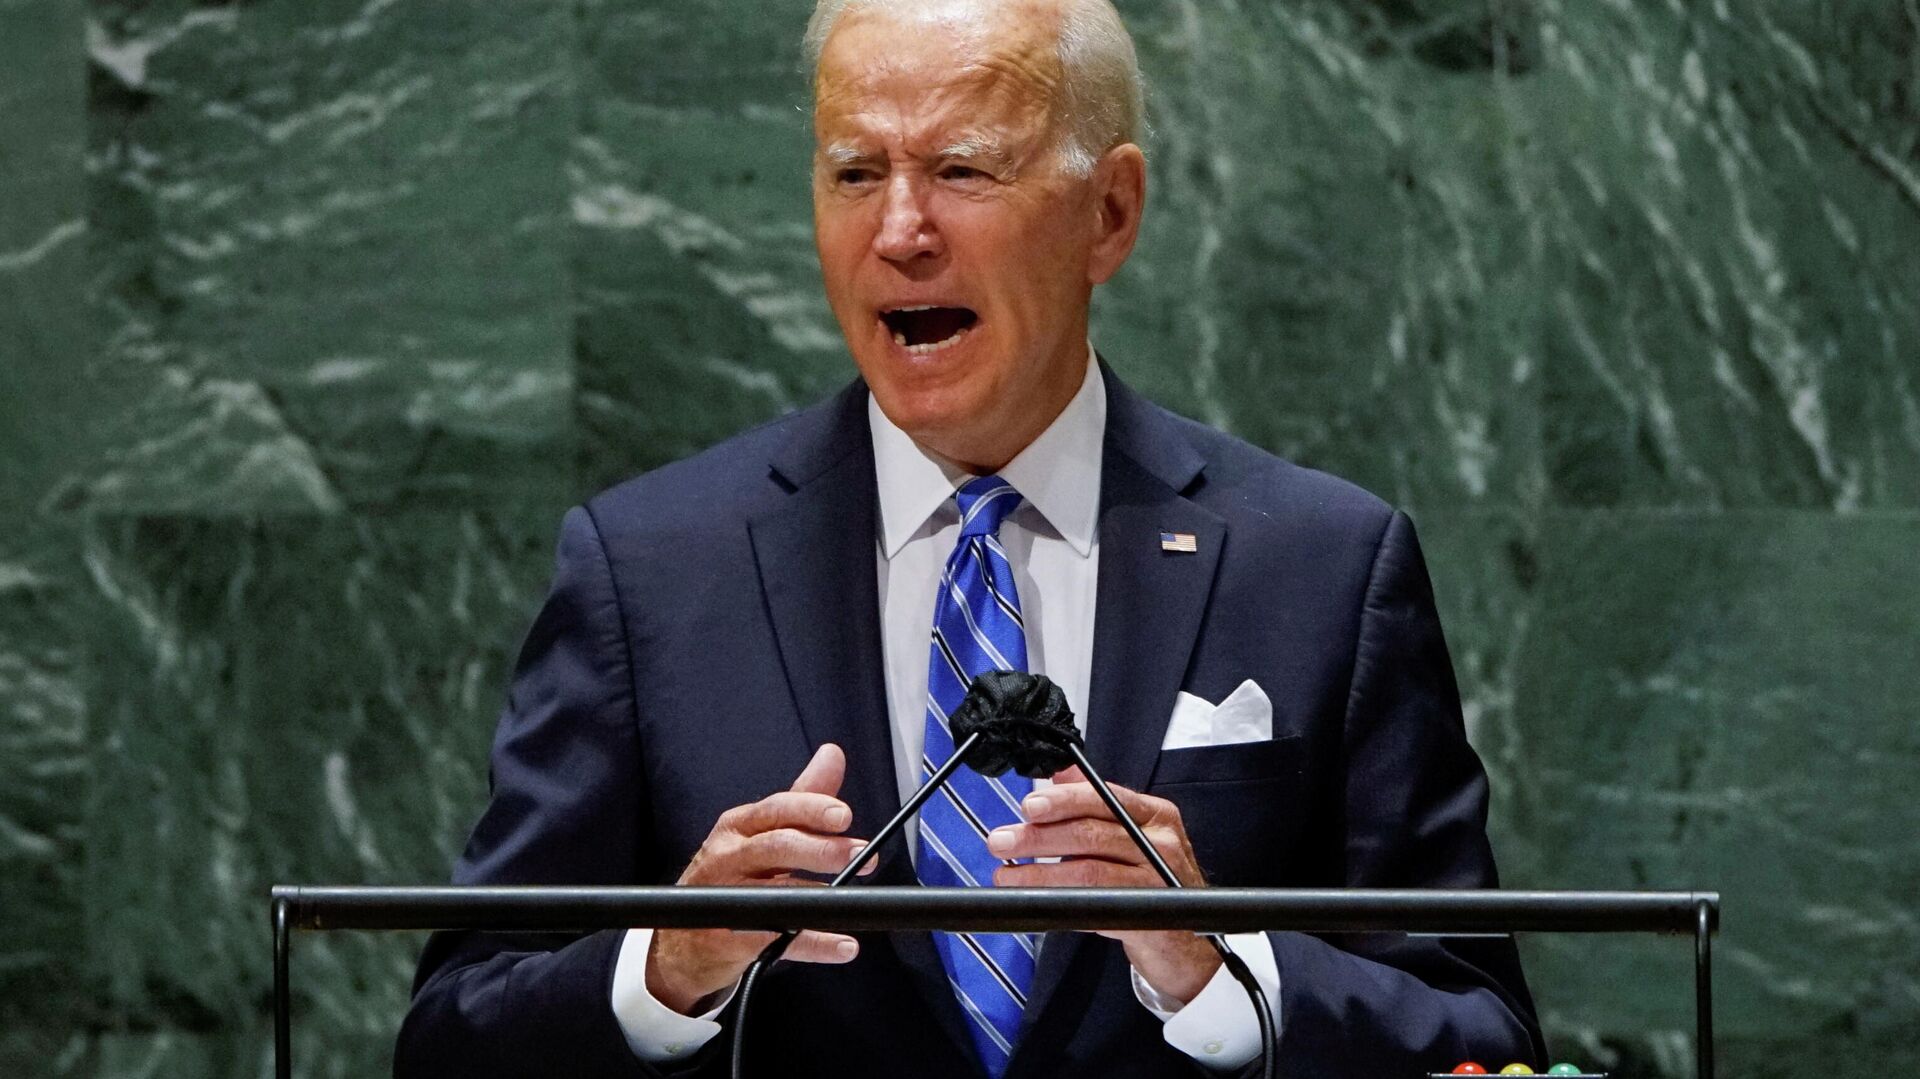 U.S. President Joe Biden addresses the 76th Session of the U.N. General Assembly in New York City, U.S., September 21, 2021 - Sputnik International, 1920, 22.09.2021